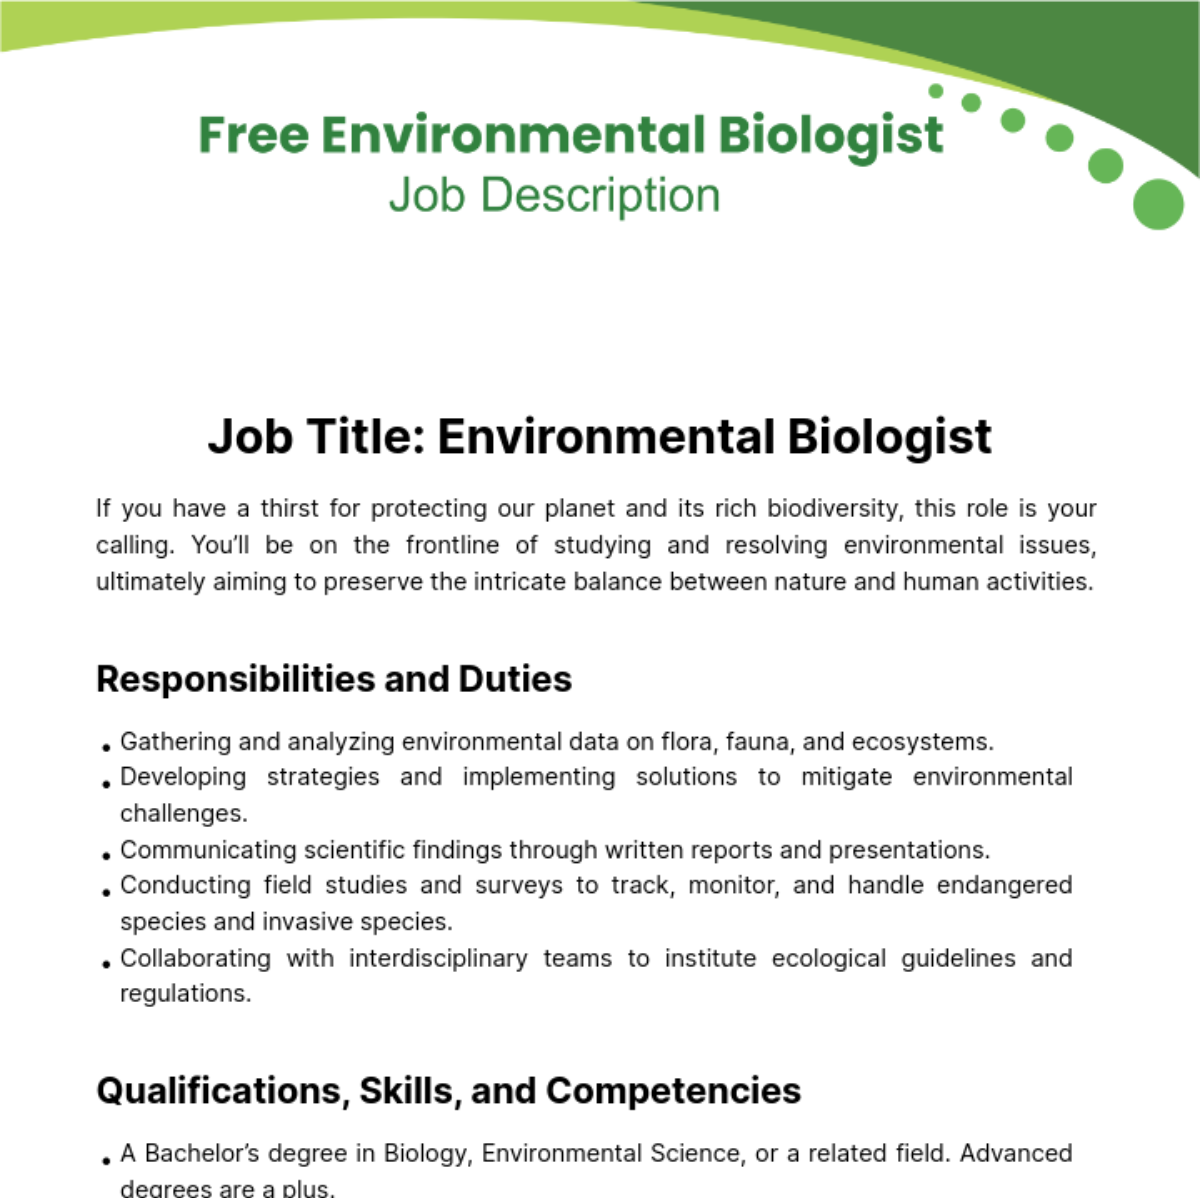 Free Environmental Biologiest Job Description Template